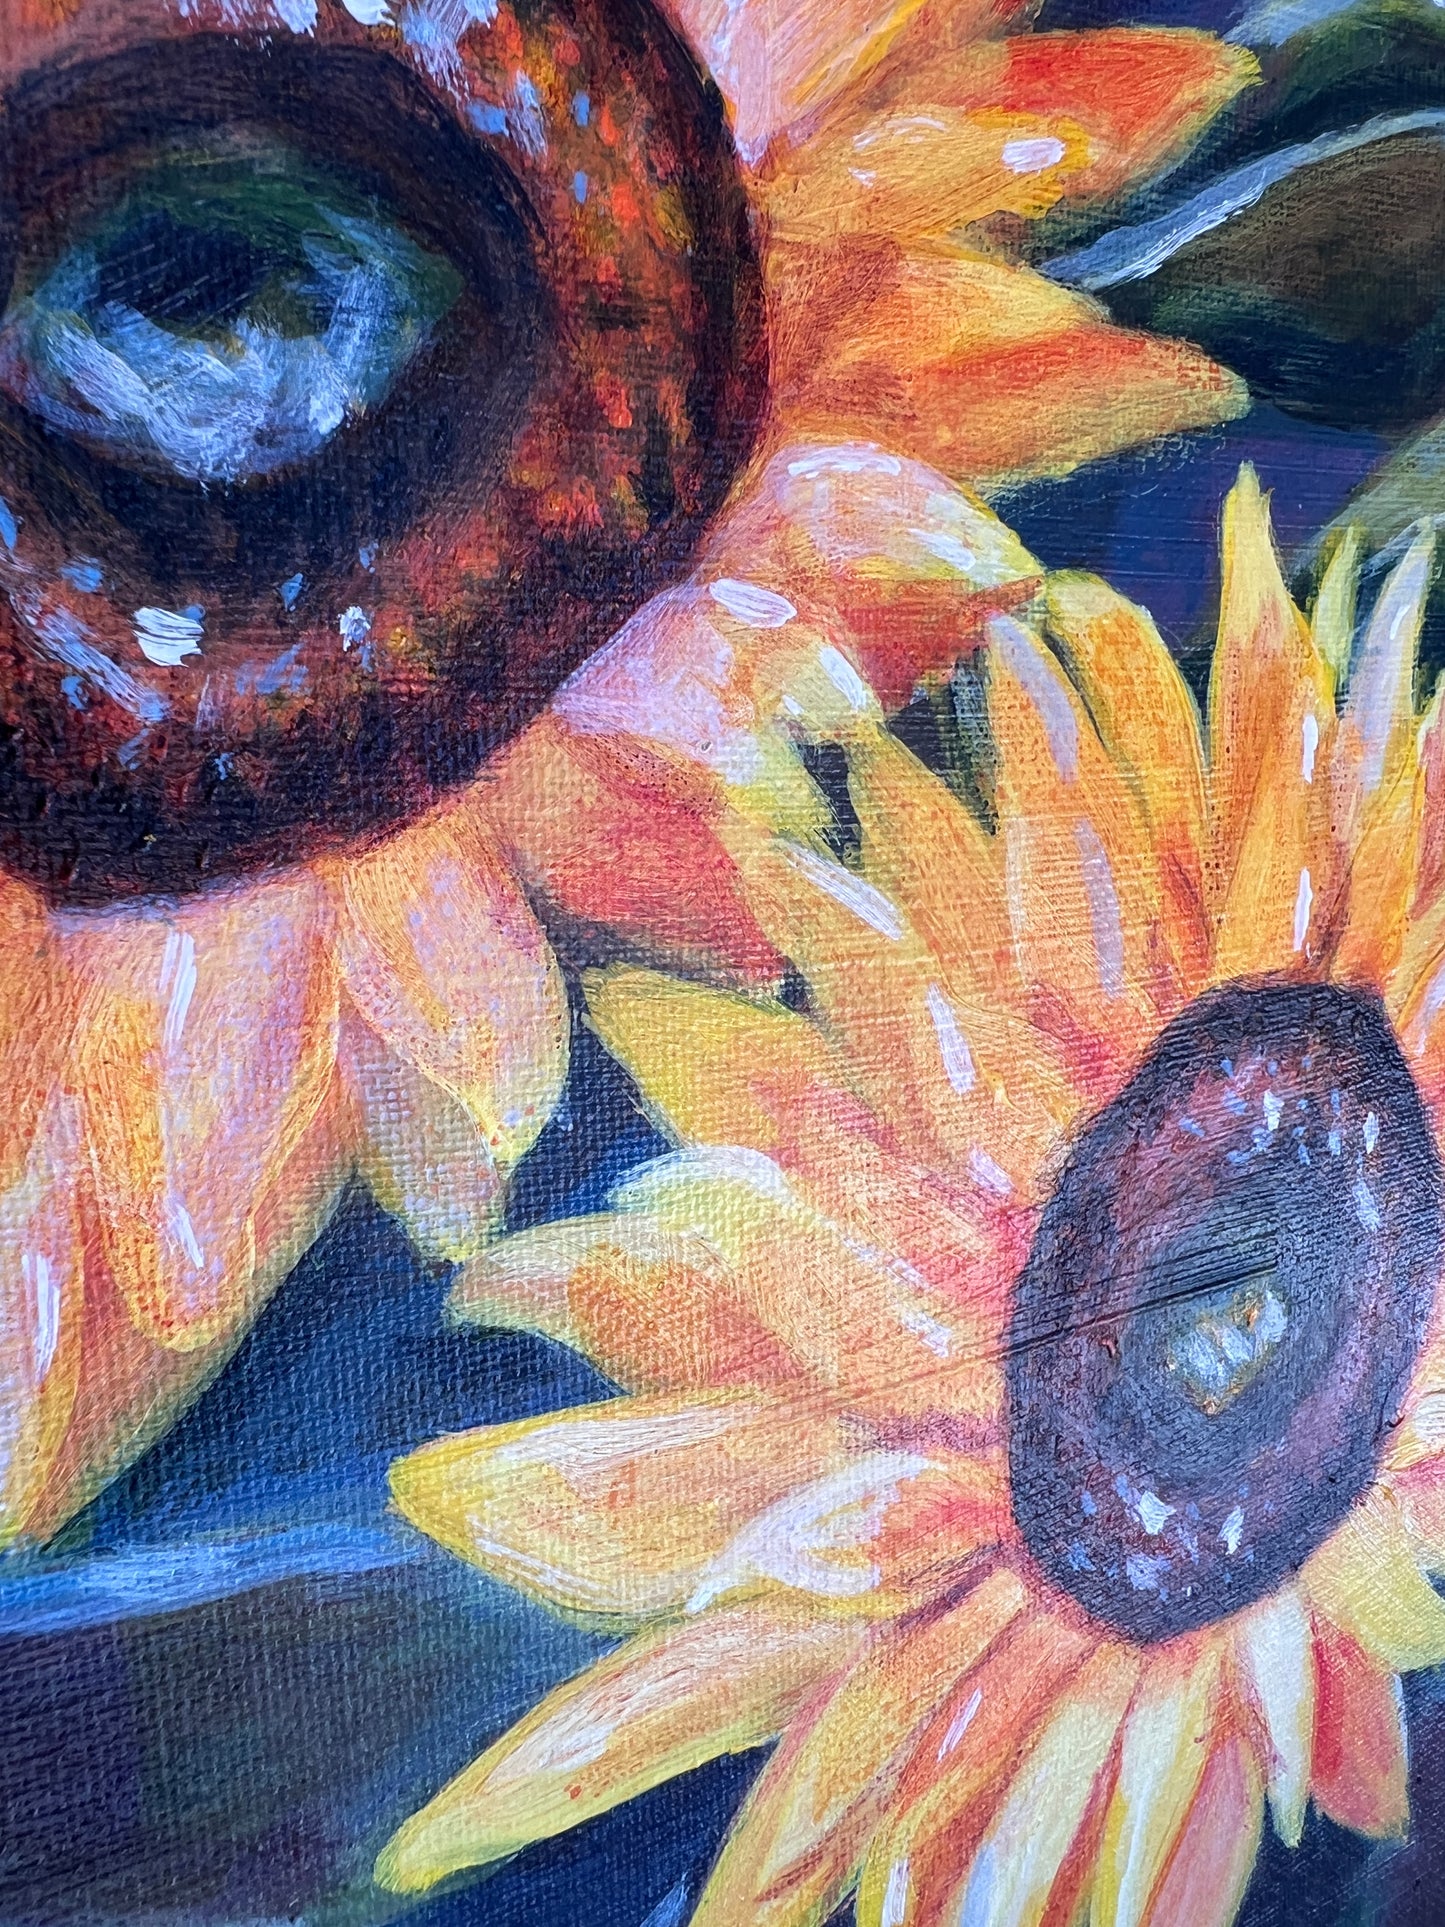 "Sunflower Harmony" 11x14" Original Painting